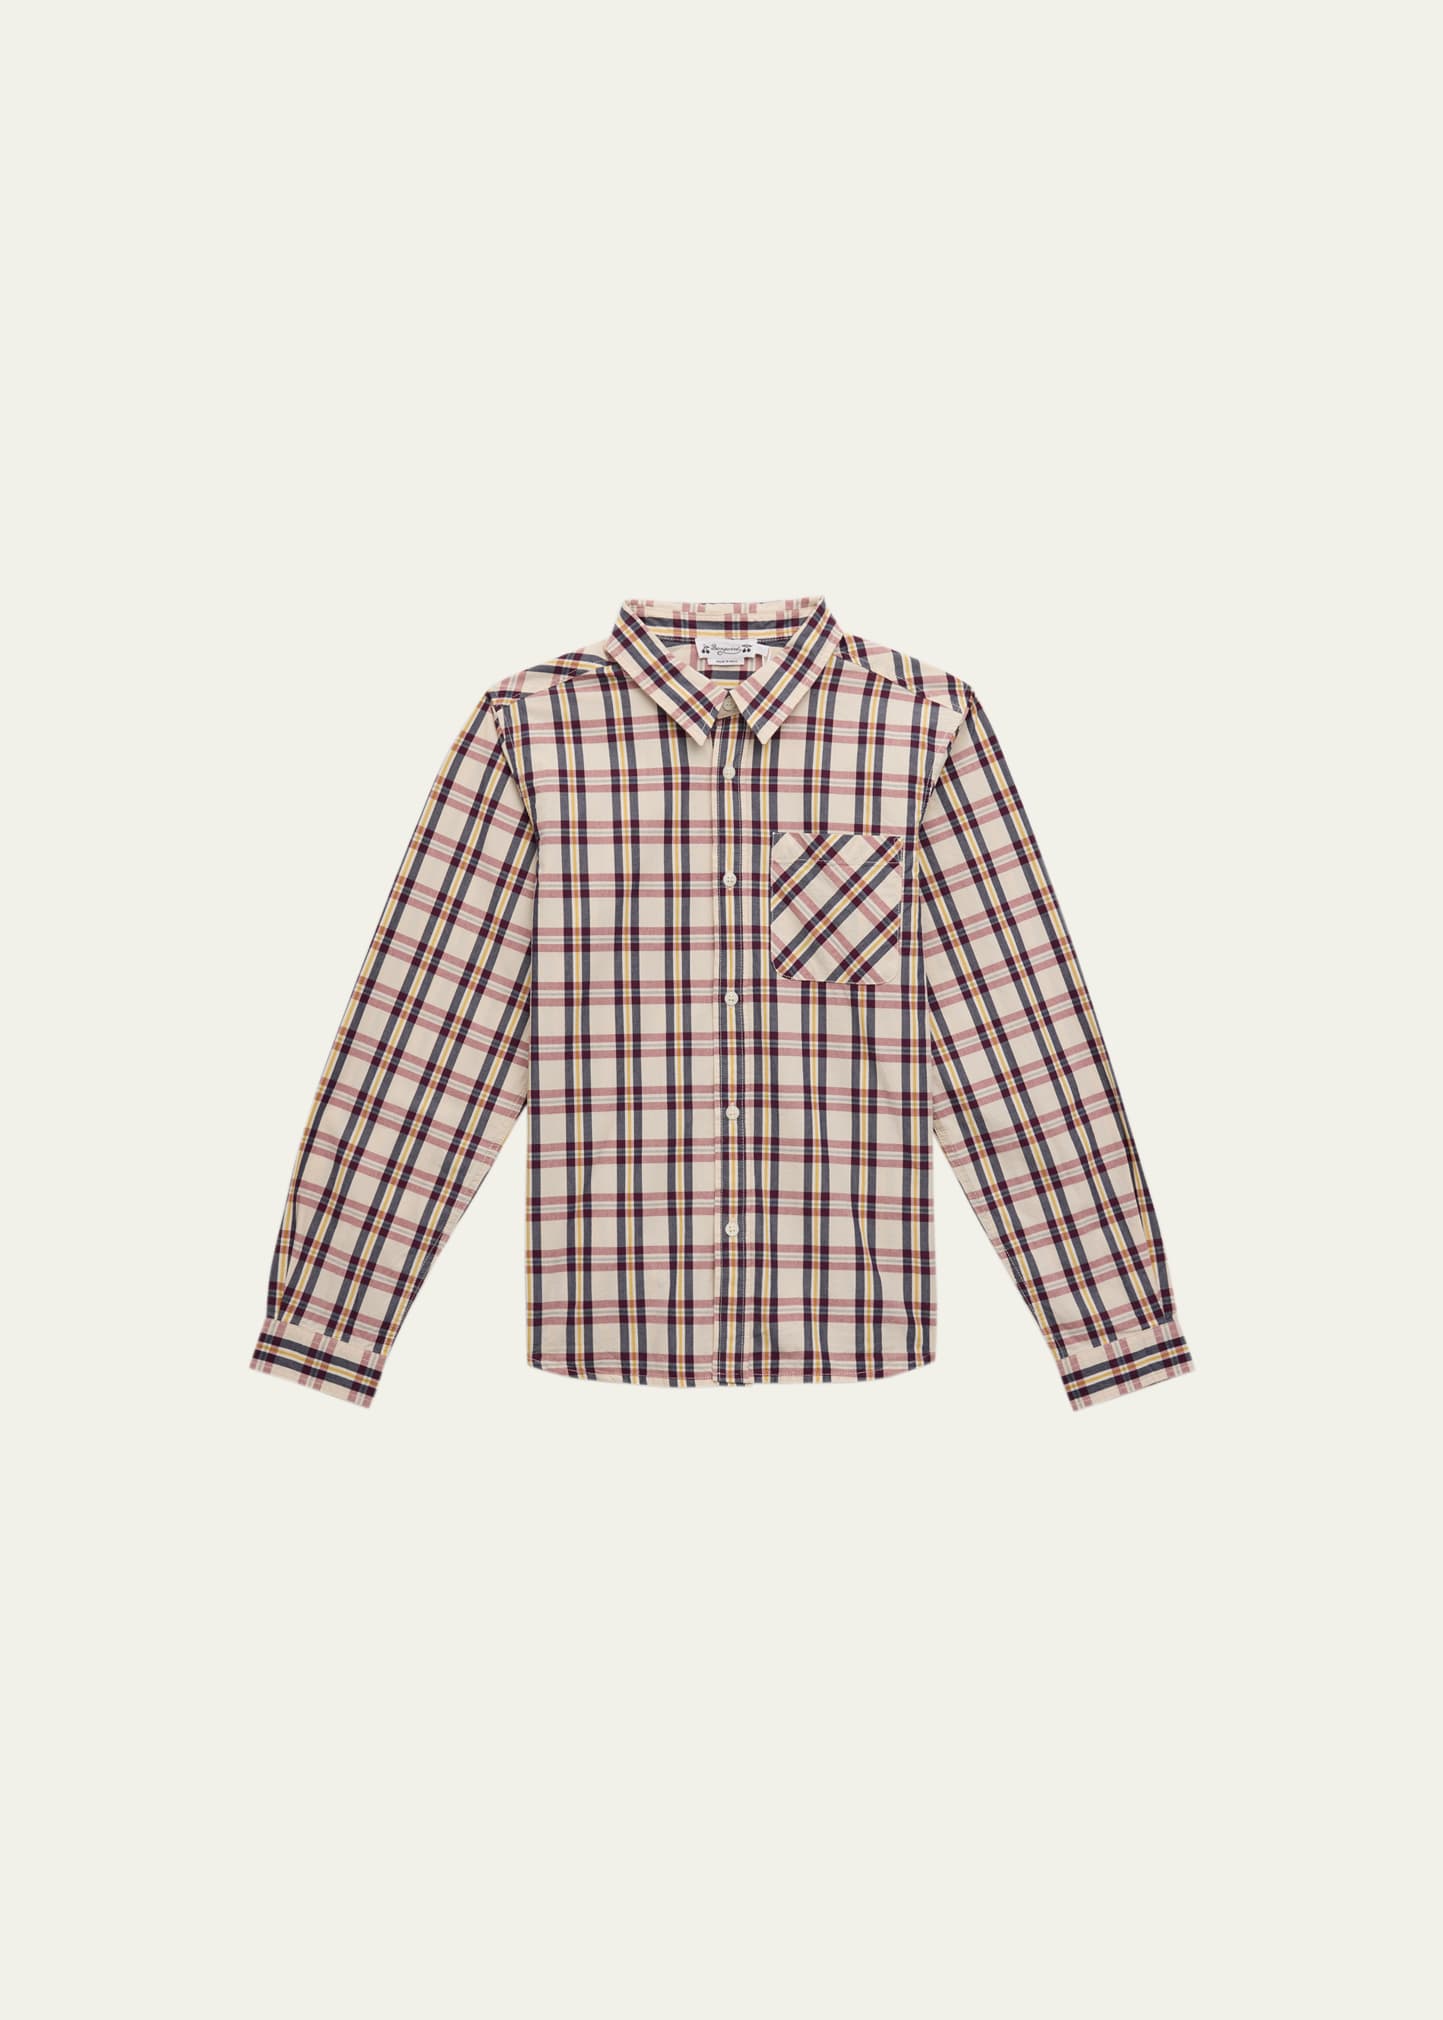 Bonpoint Boy's Tango Plaid Shirt, Size 4-12